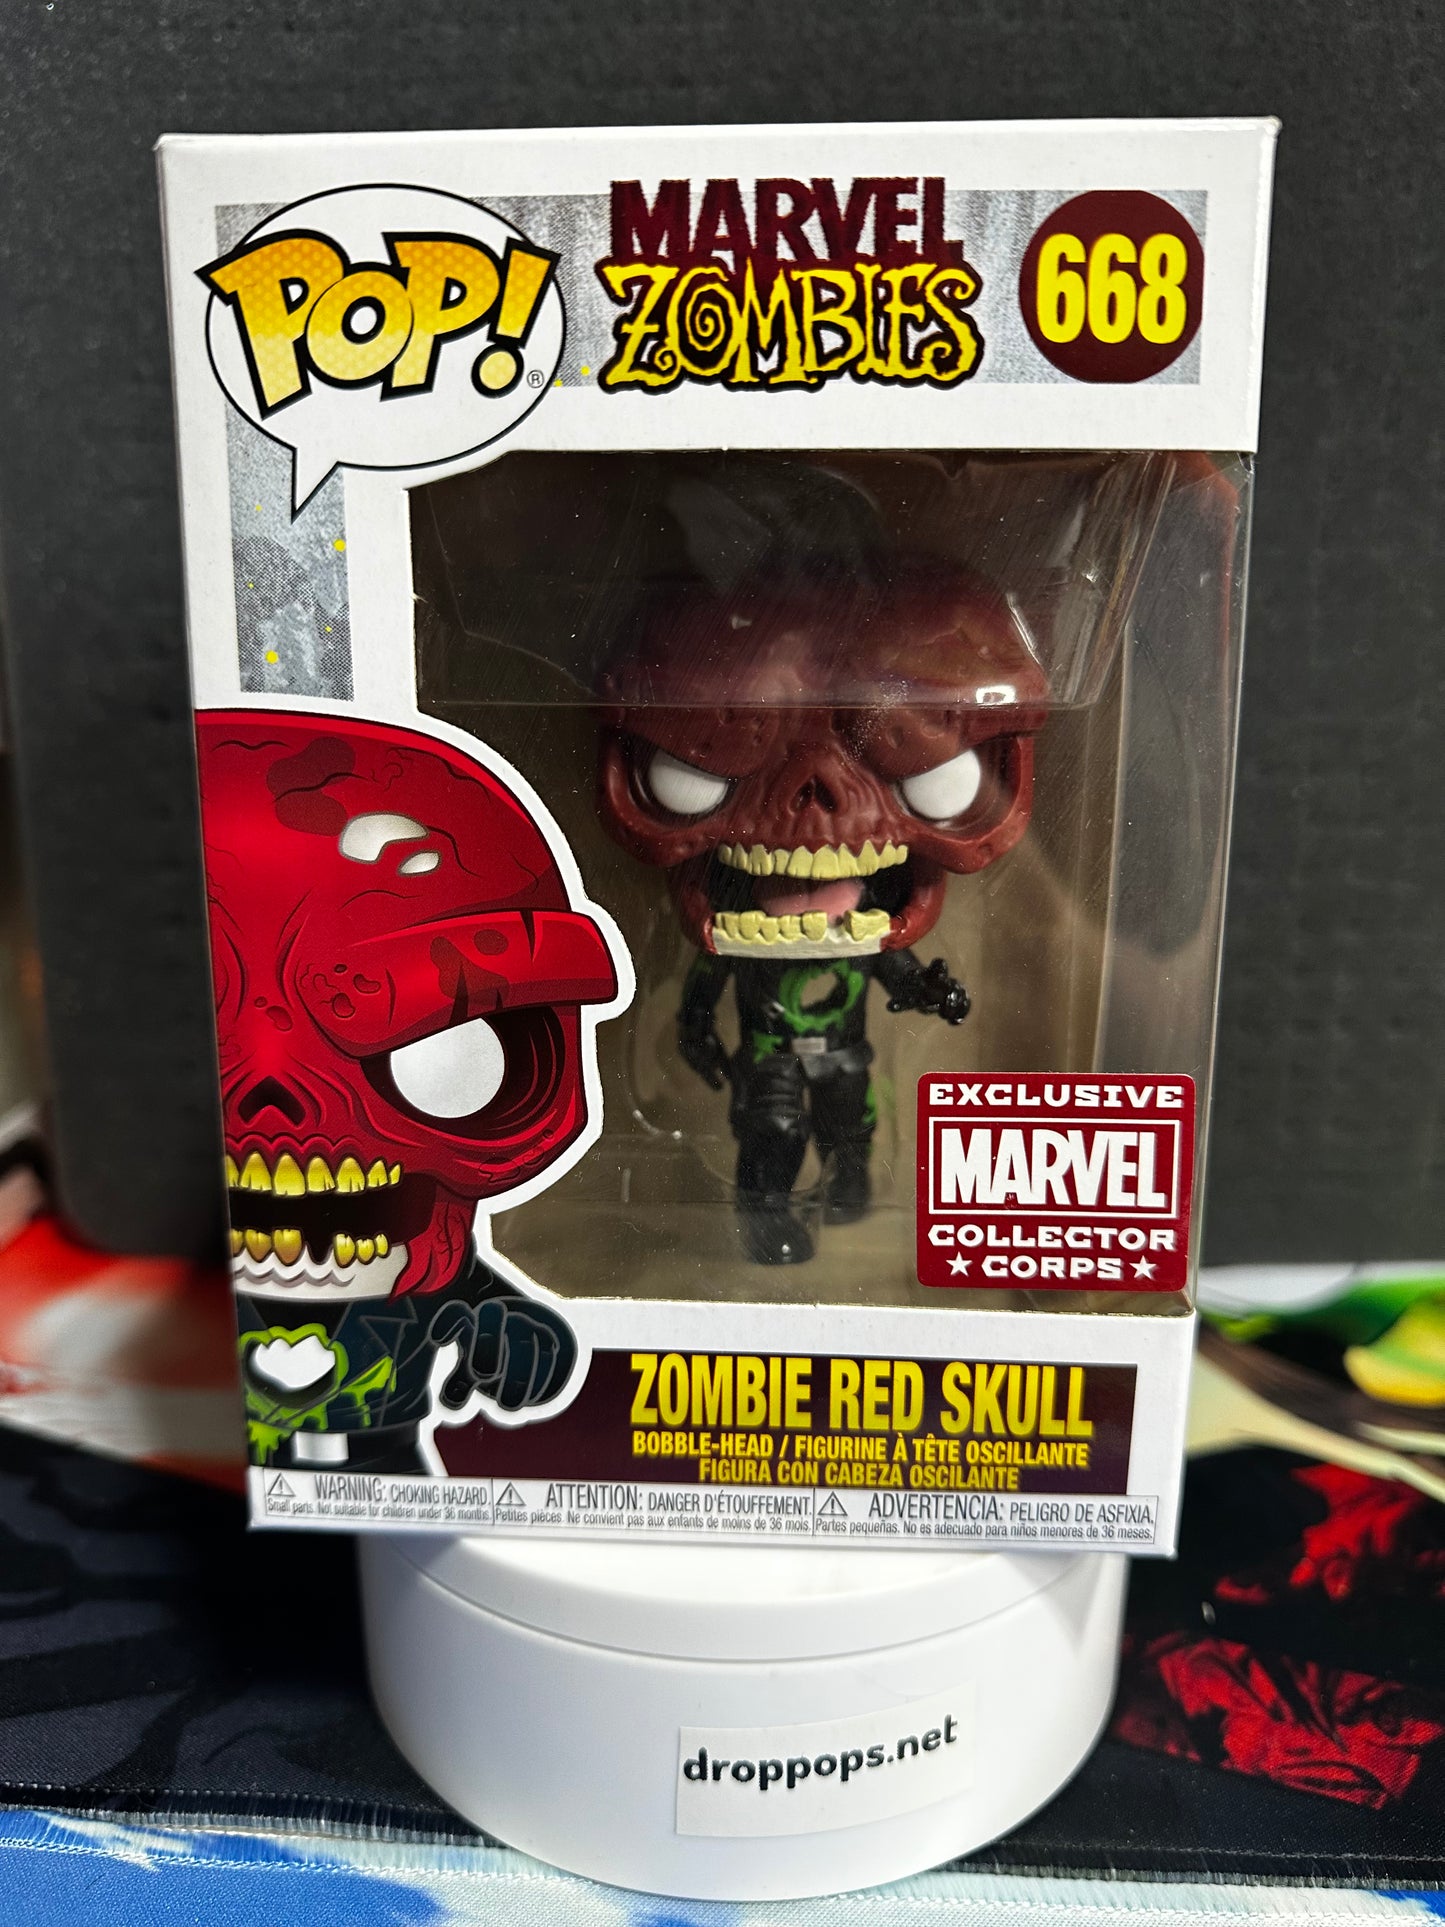 Zombie Red Skull 668 Funko Pop